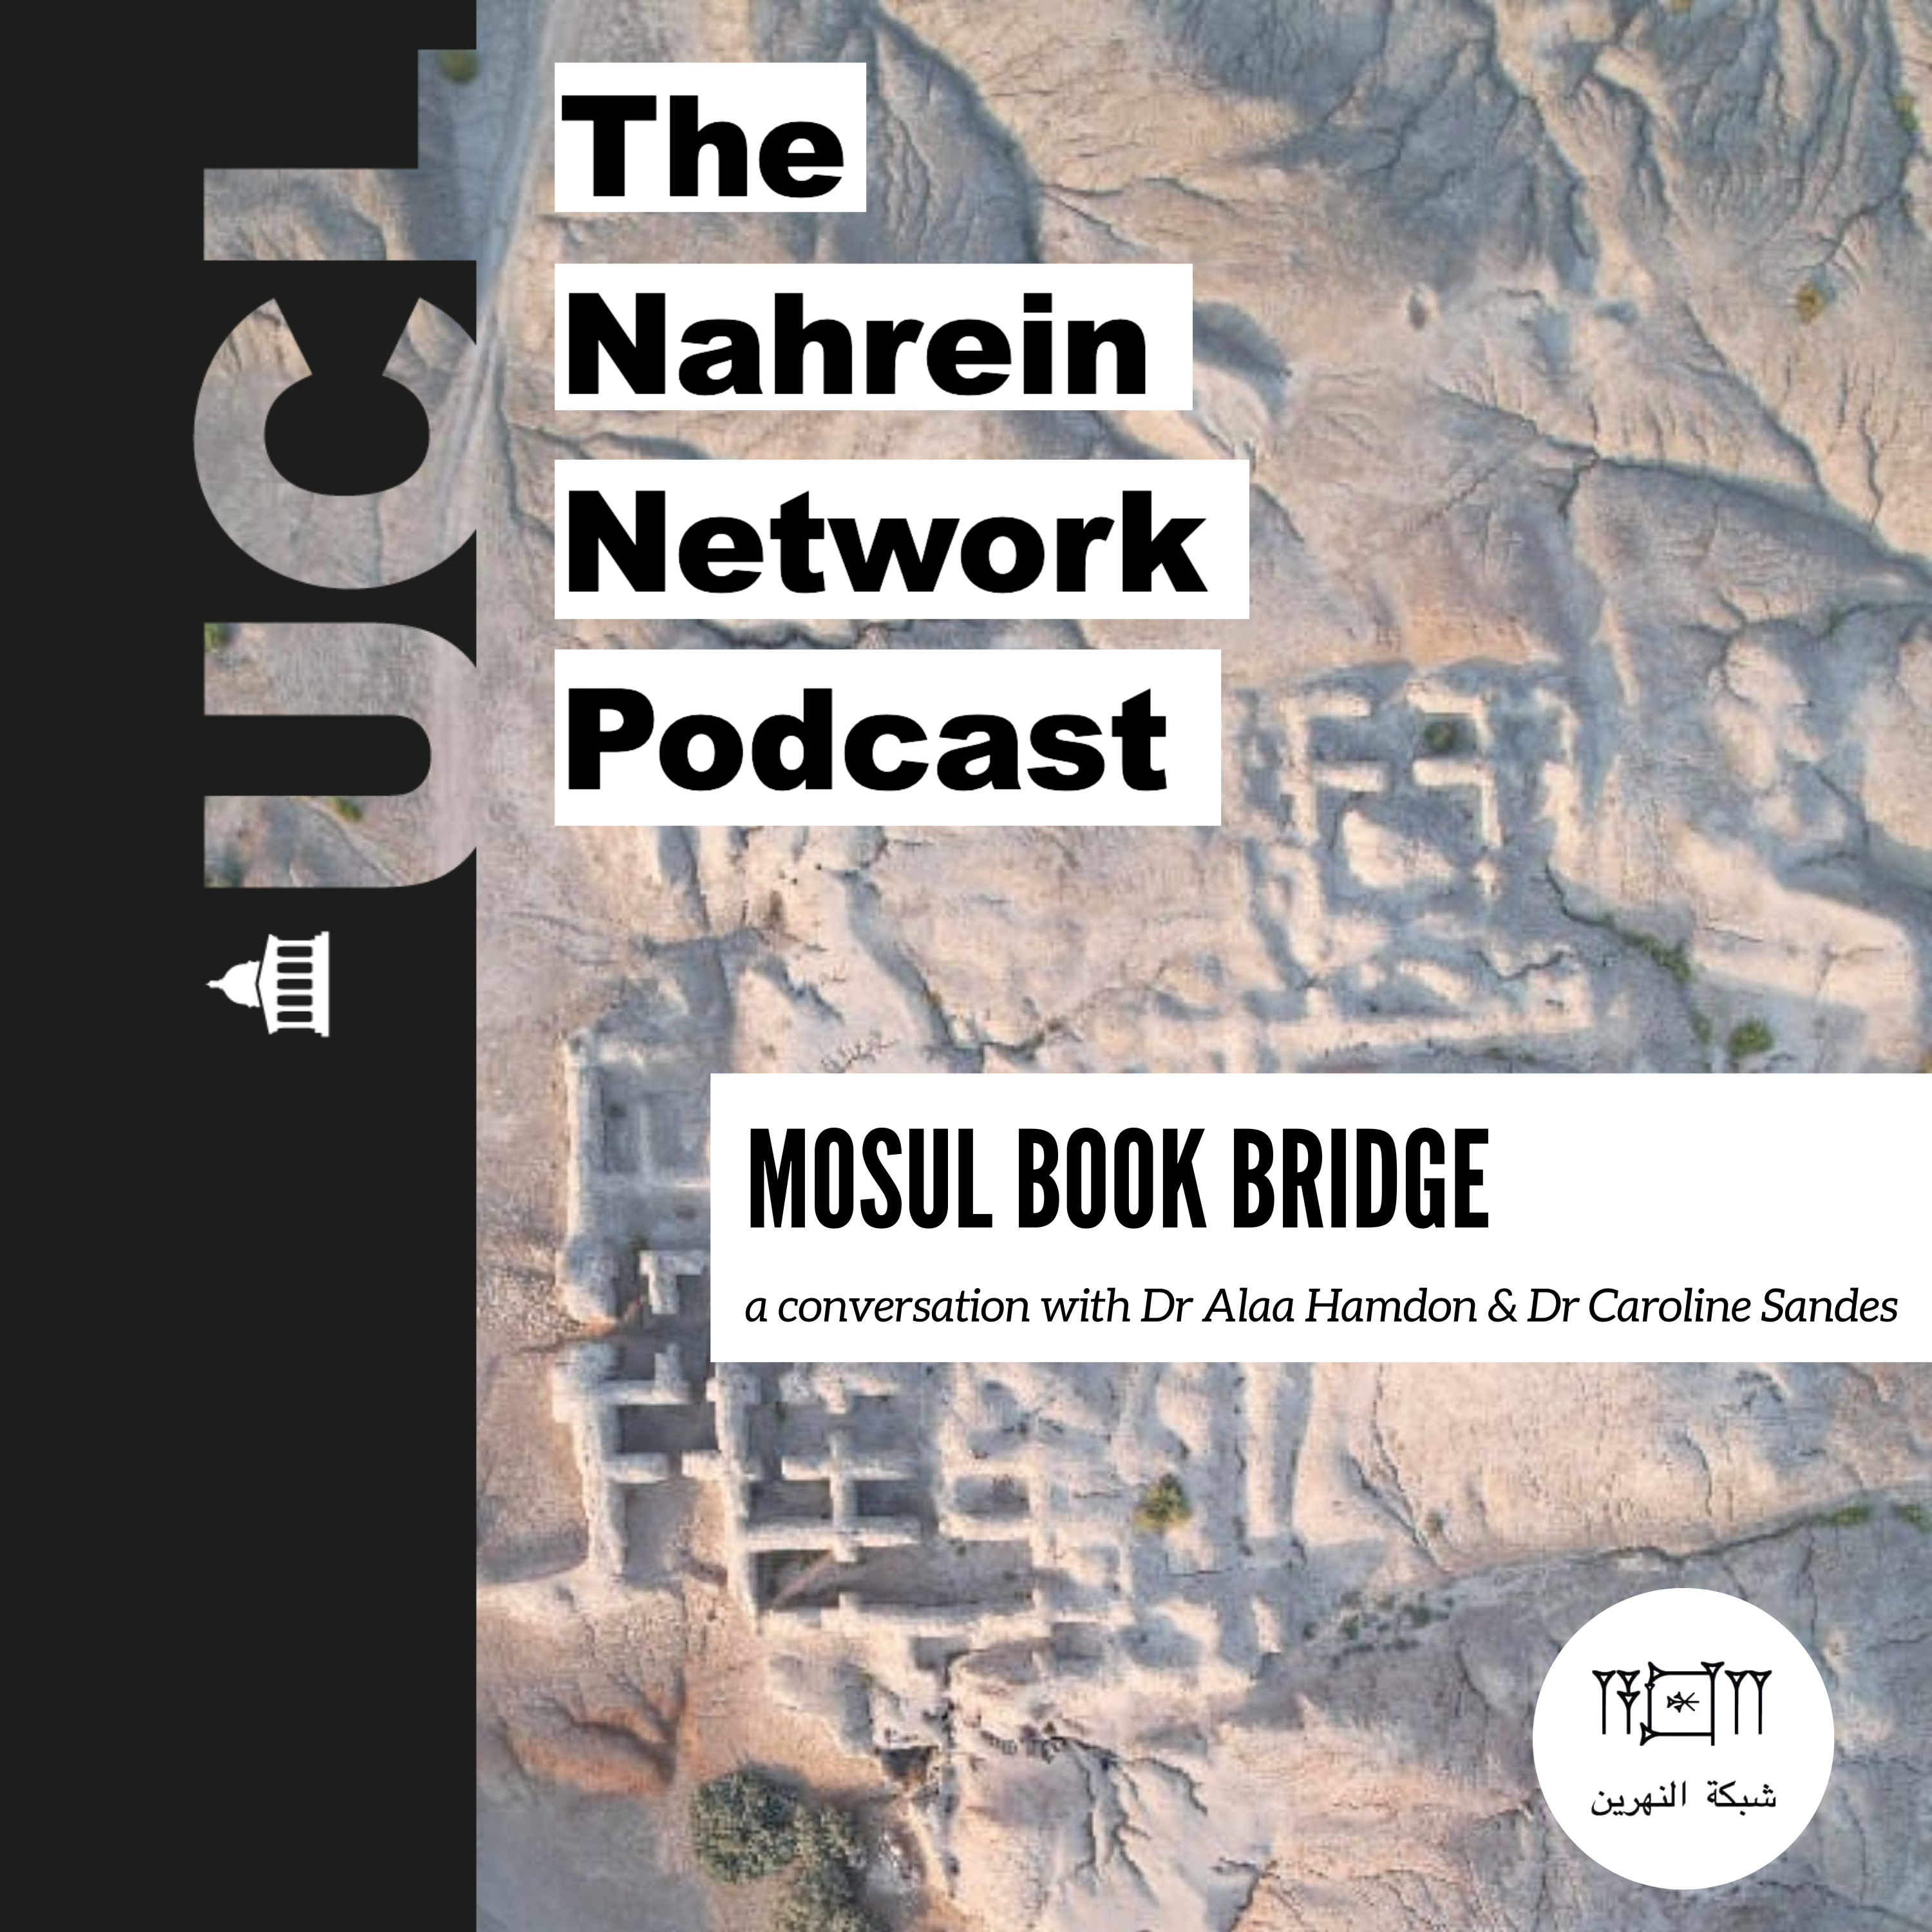 Mosul Book Bridge